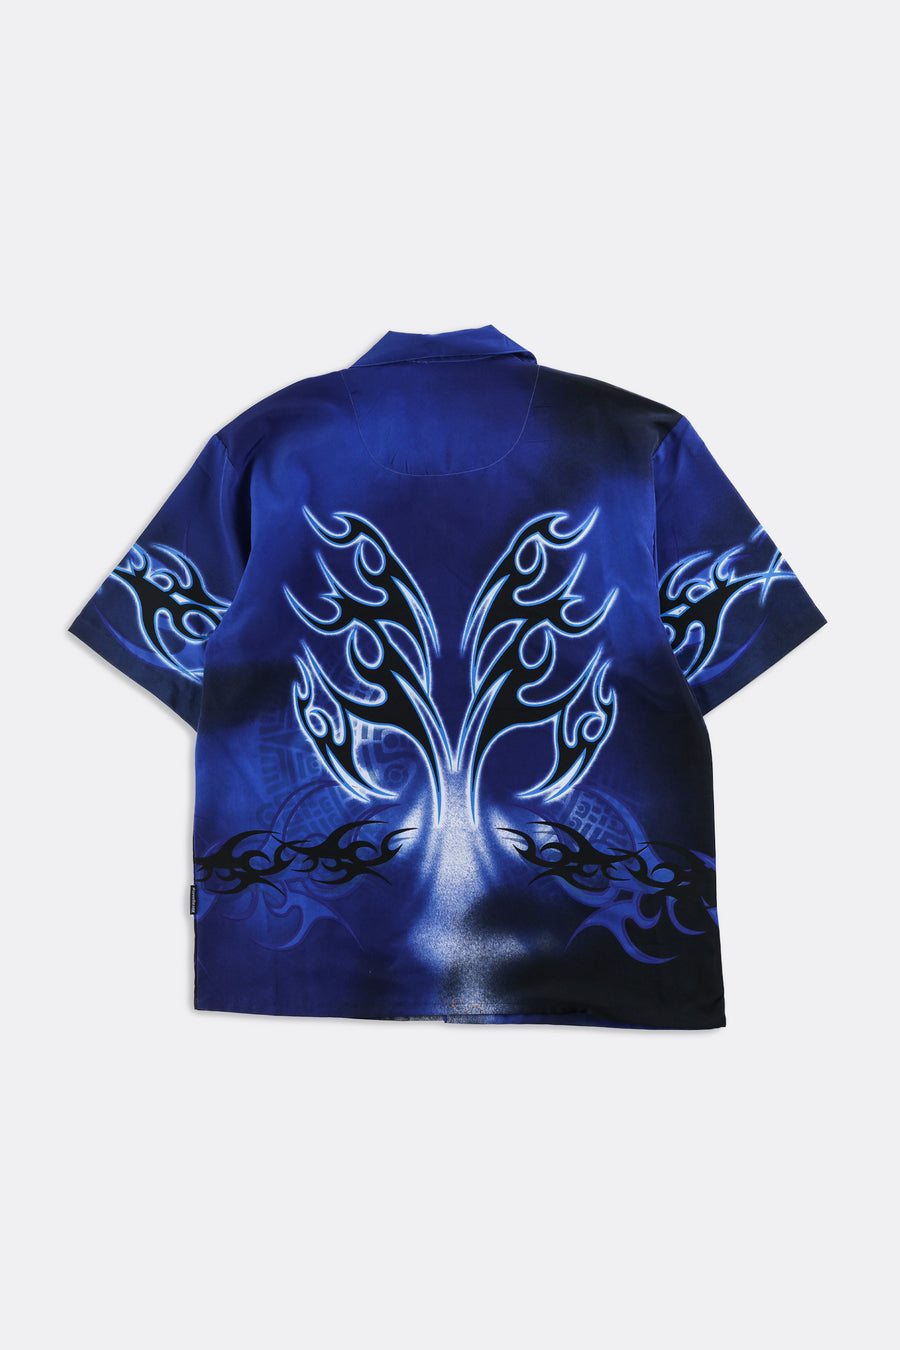 Deadstock Dragonfly Blue Tribal Camp Shirt - M, XXL